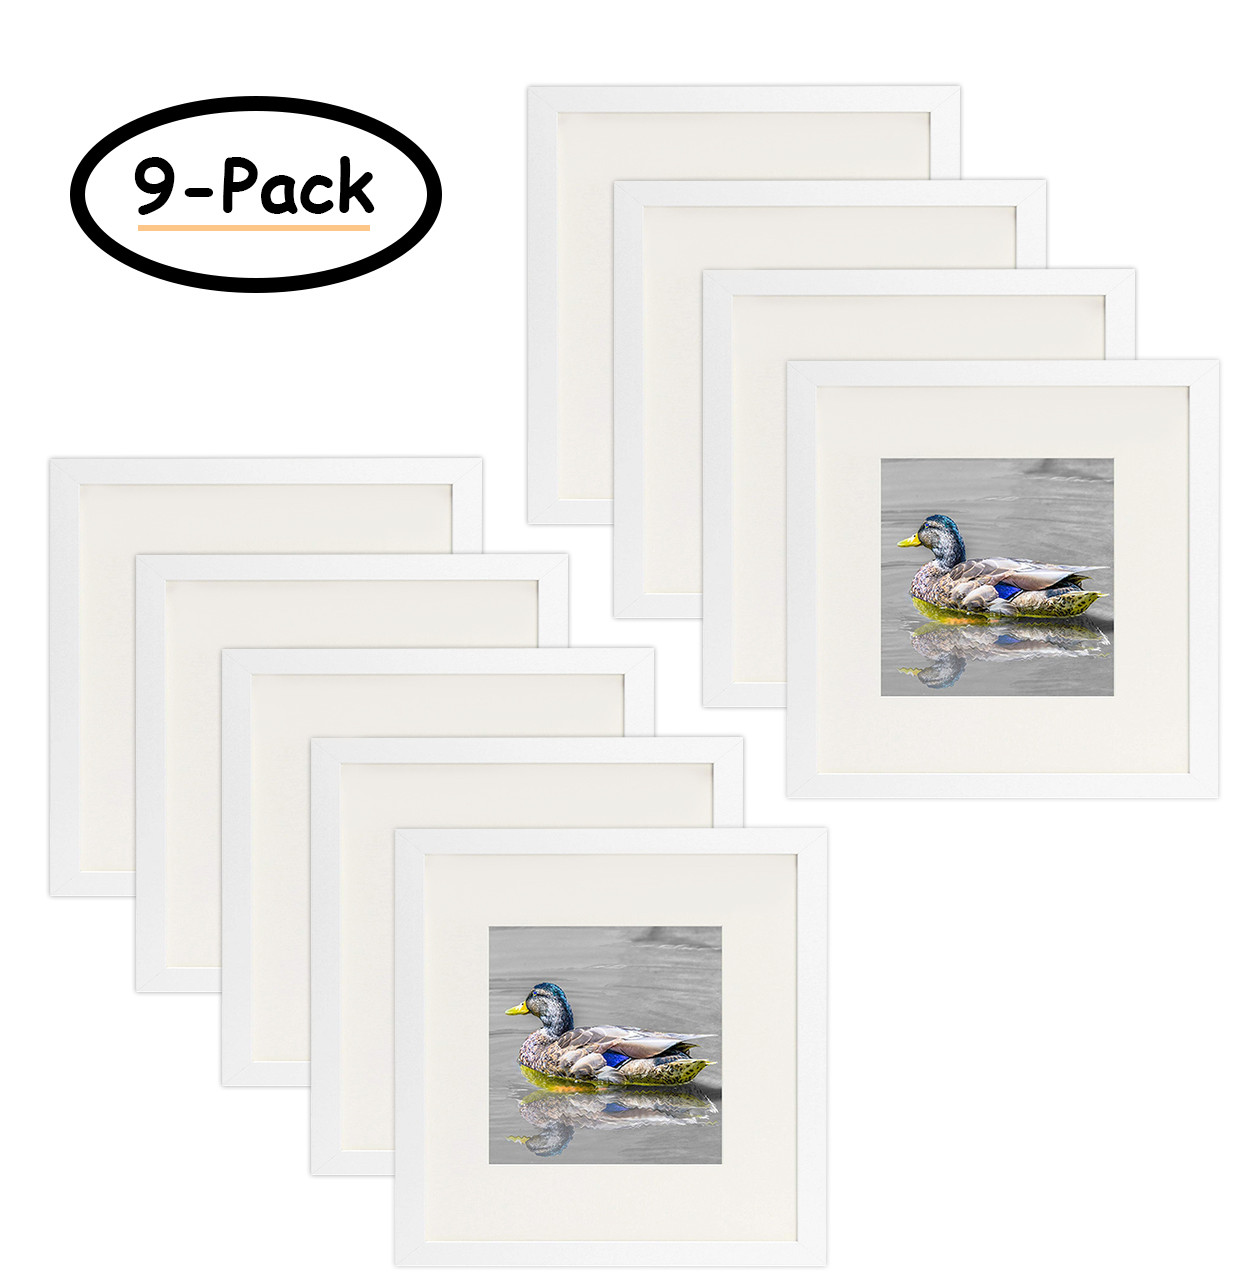 12x12 - Size - Backing Packs - PACKS